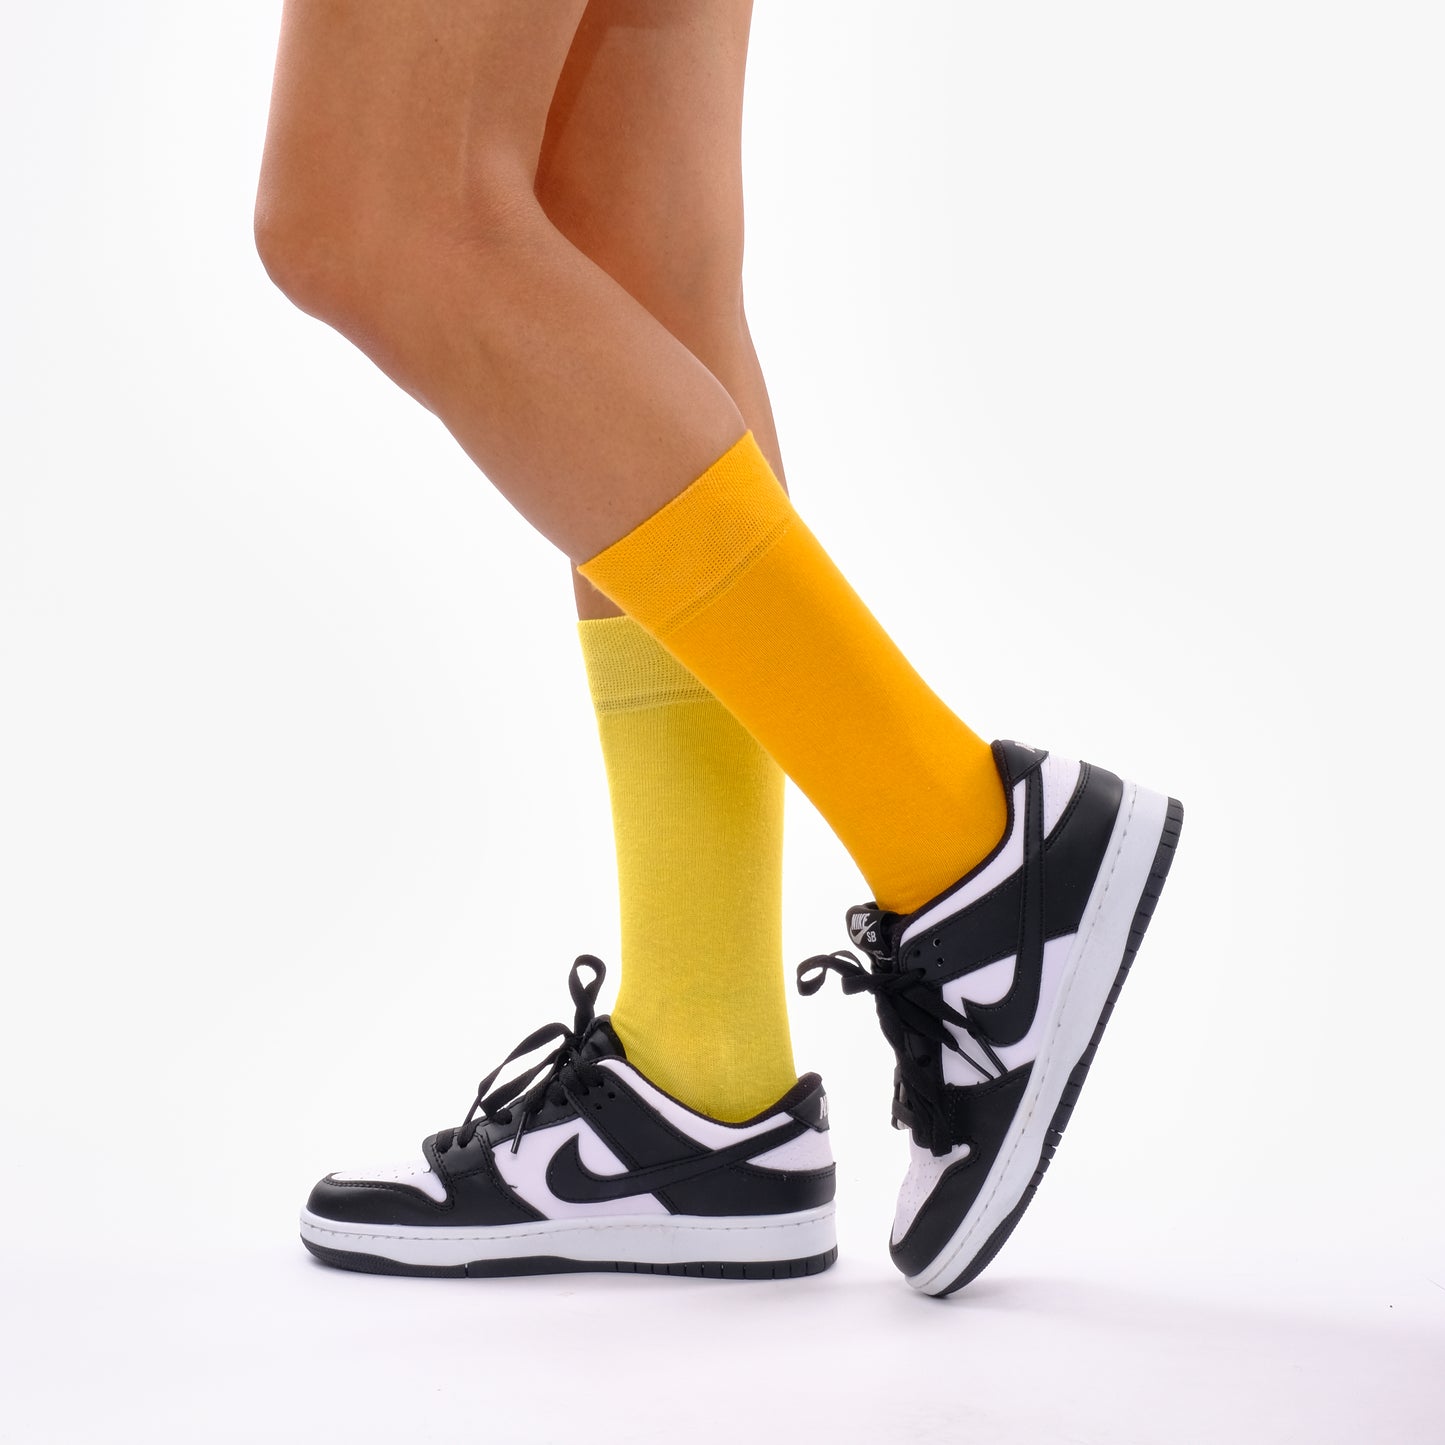 Mustard Yellow & Yellow Odd Socks